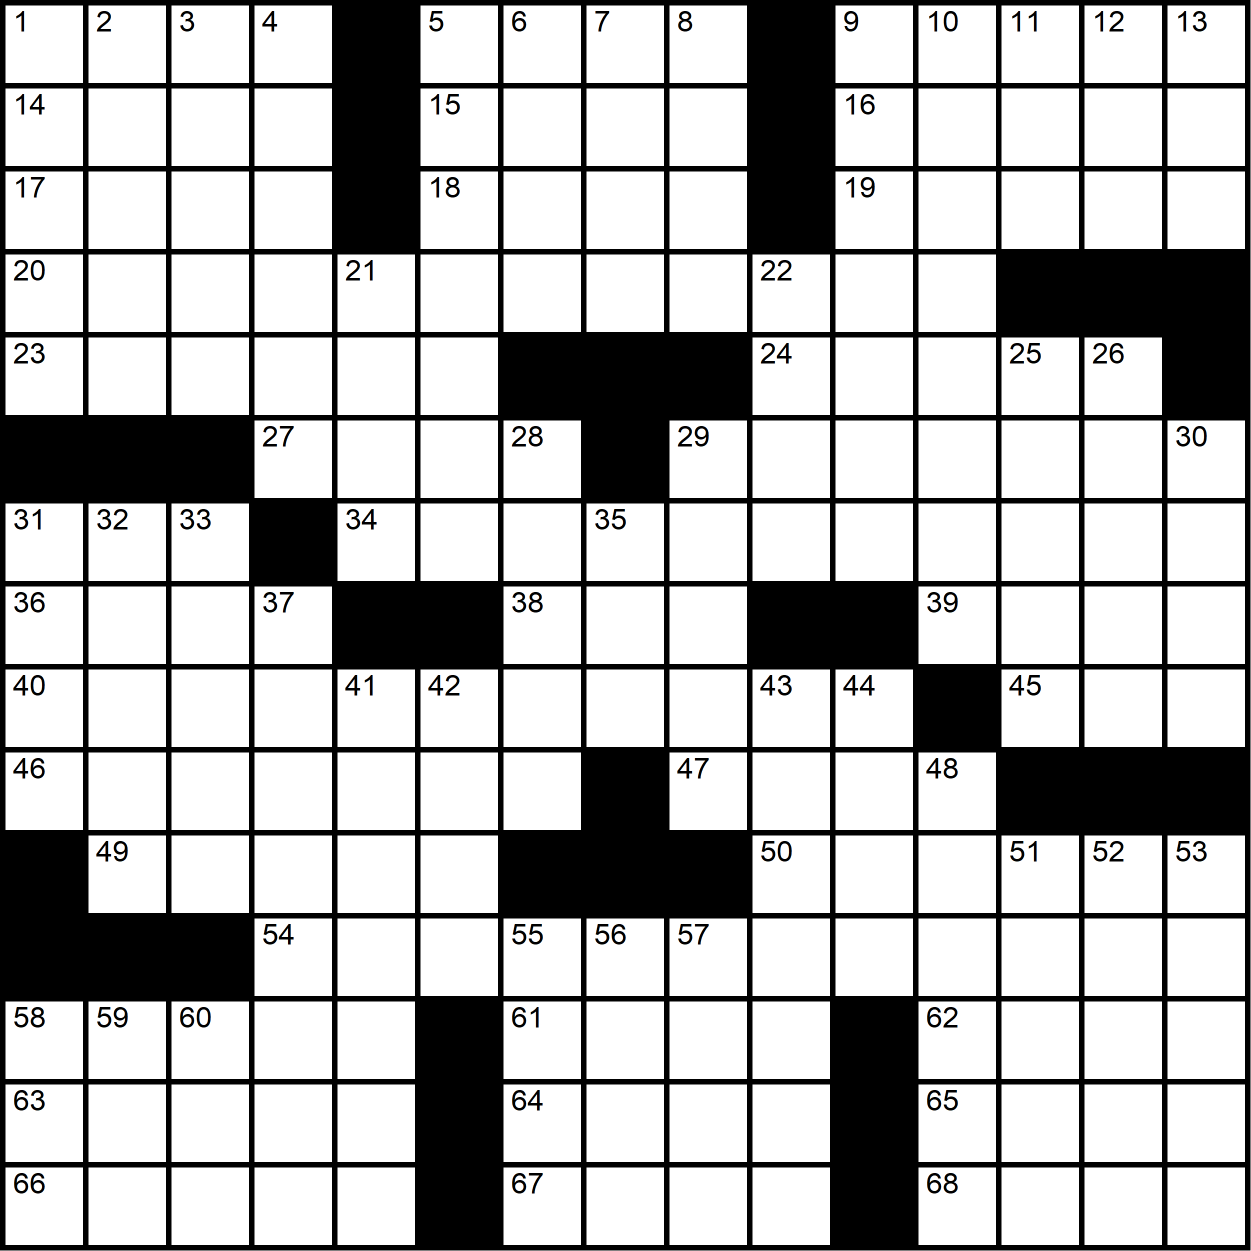 A 15x15 themed crossword grid.